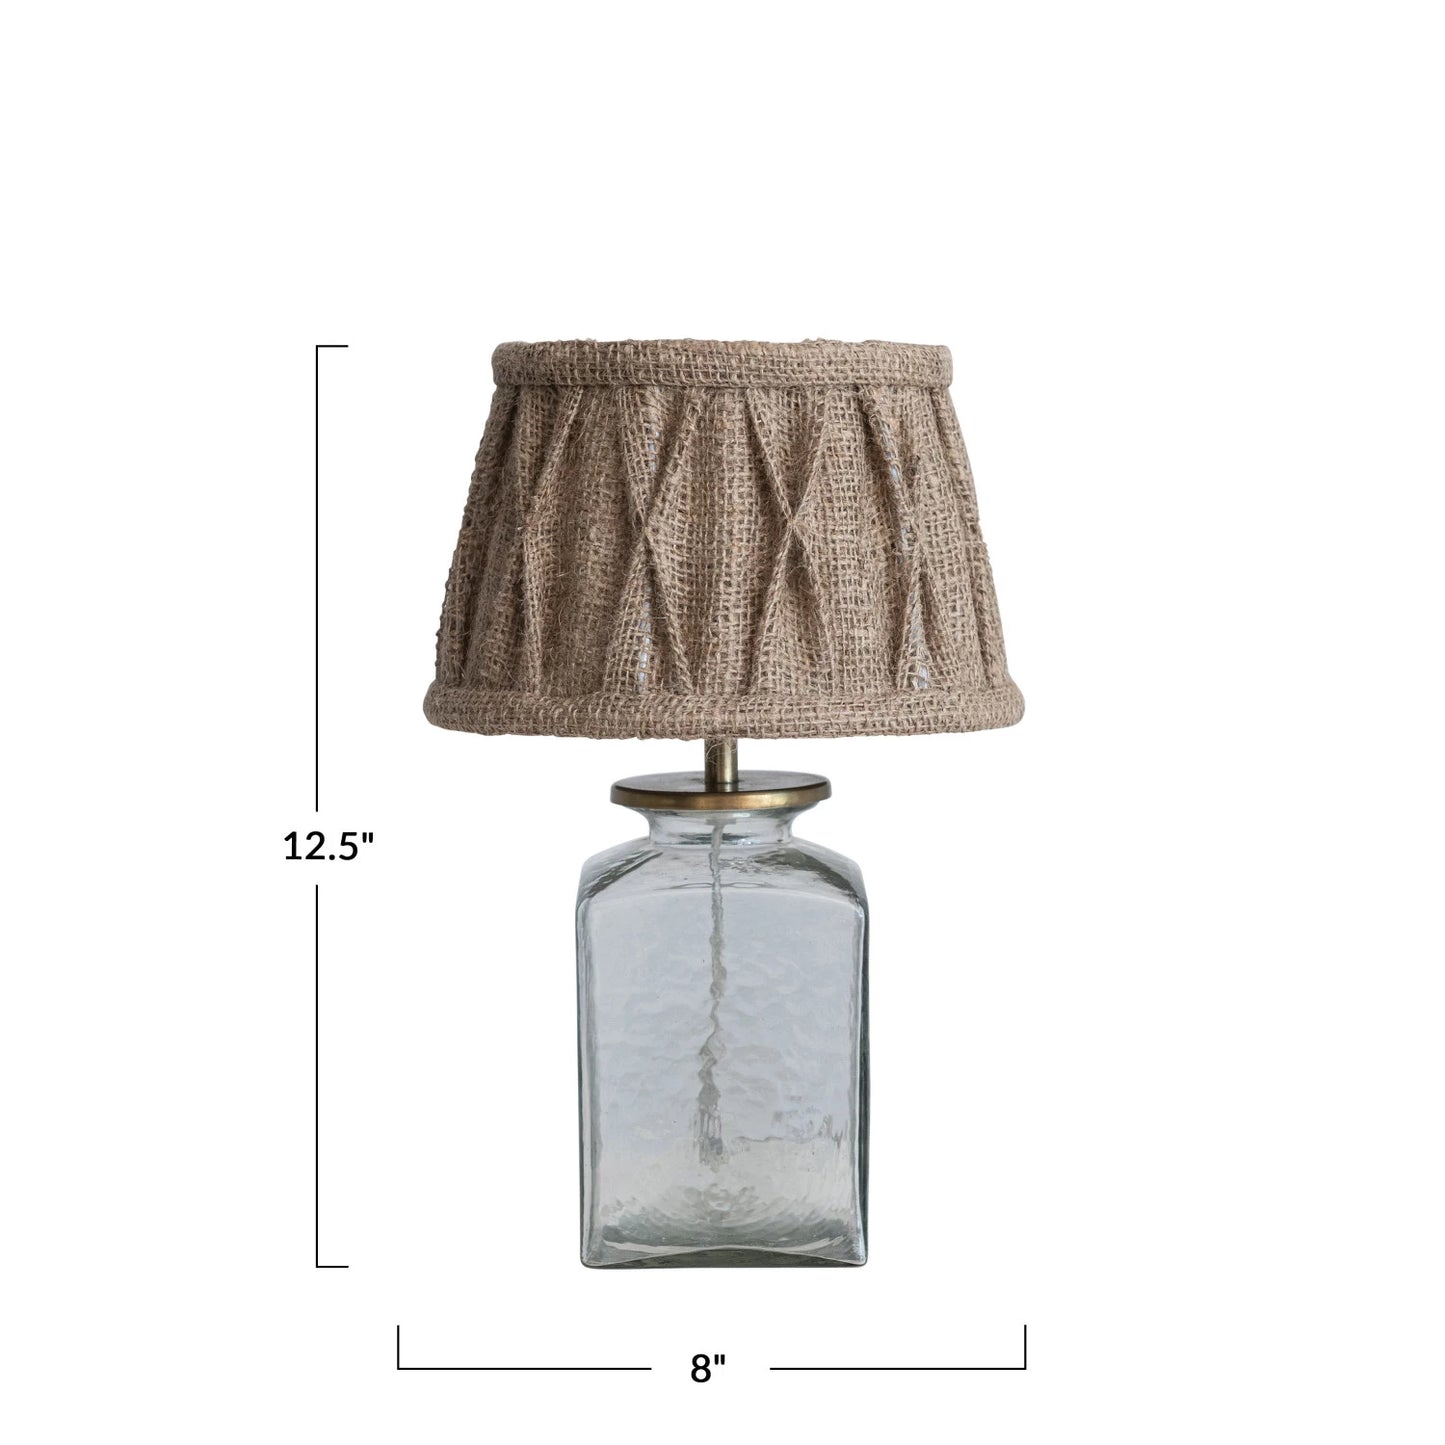 Glass & Metal Table Lamp w/ Pintucked Jute Shade